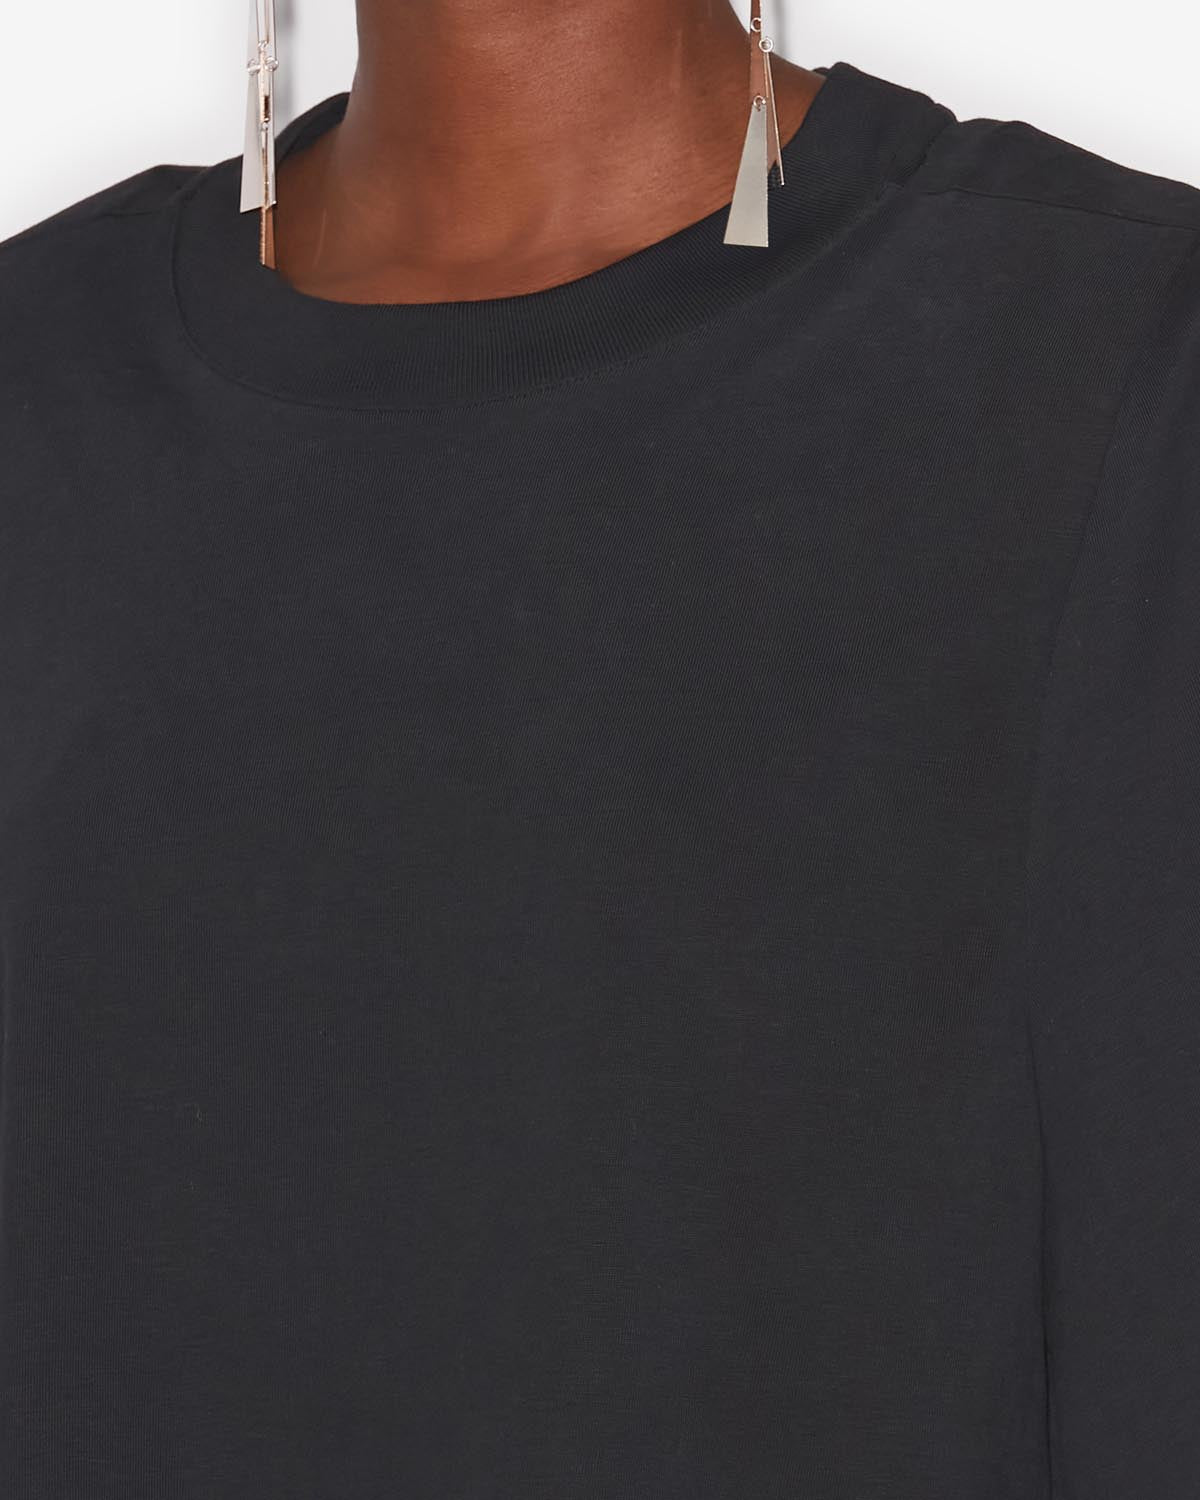 Camiseta zaely Woman Negro 3